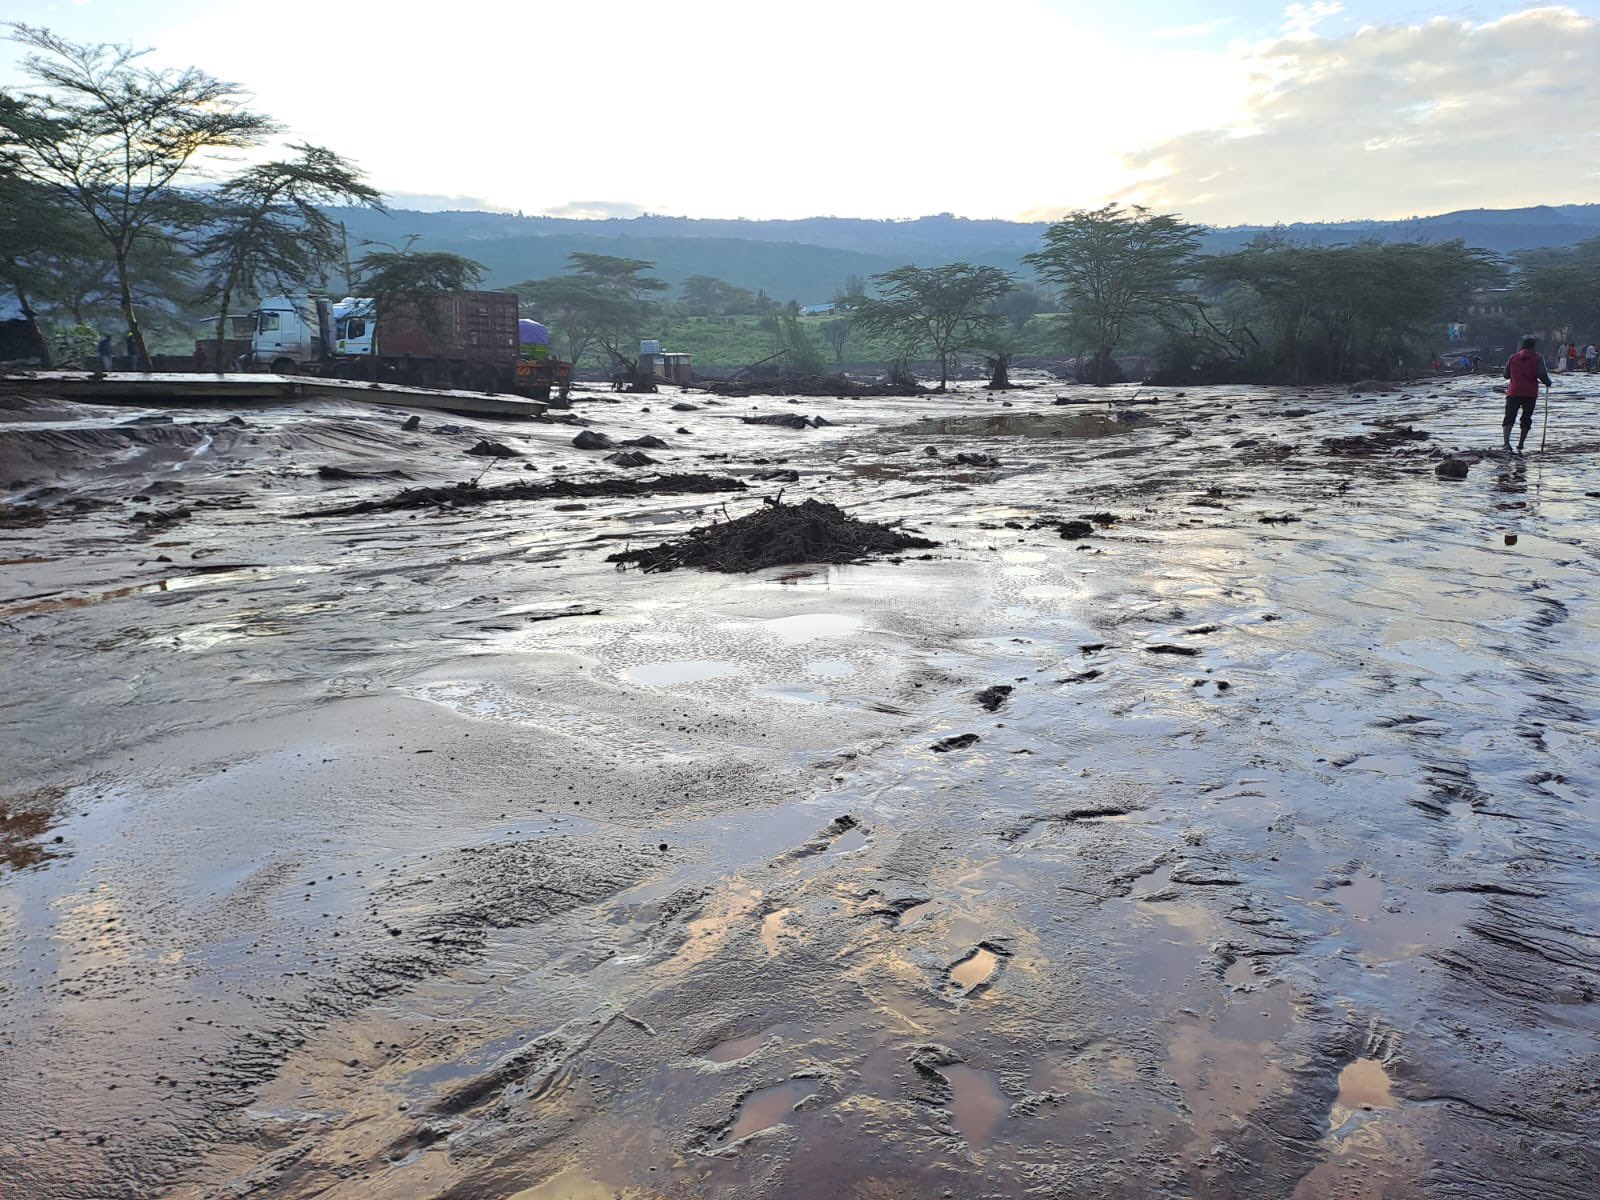 Questions linger as deadly rains, floods ravage Kenya